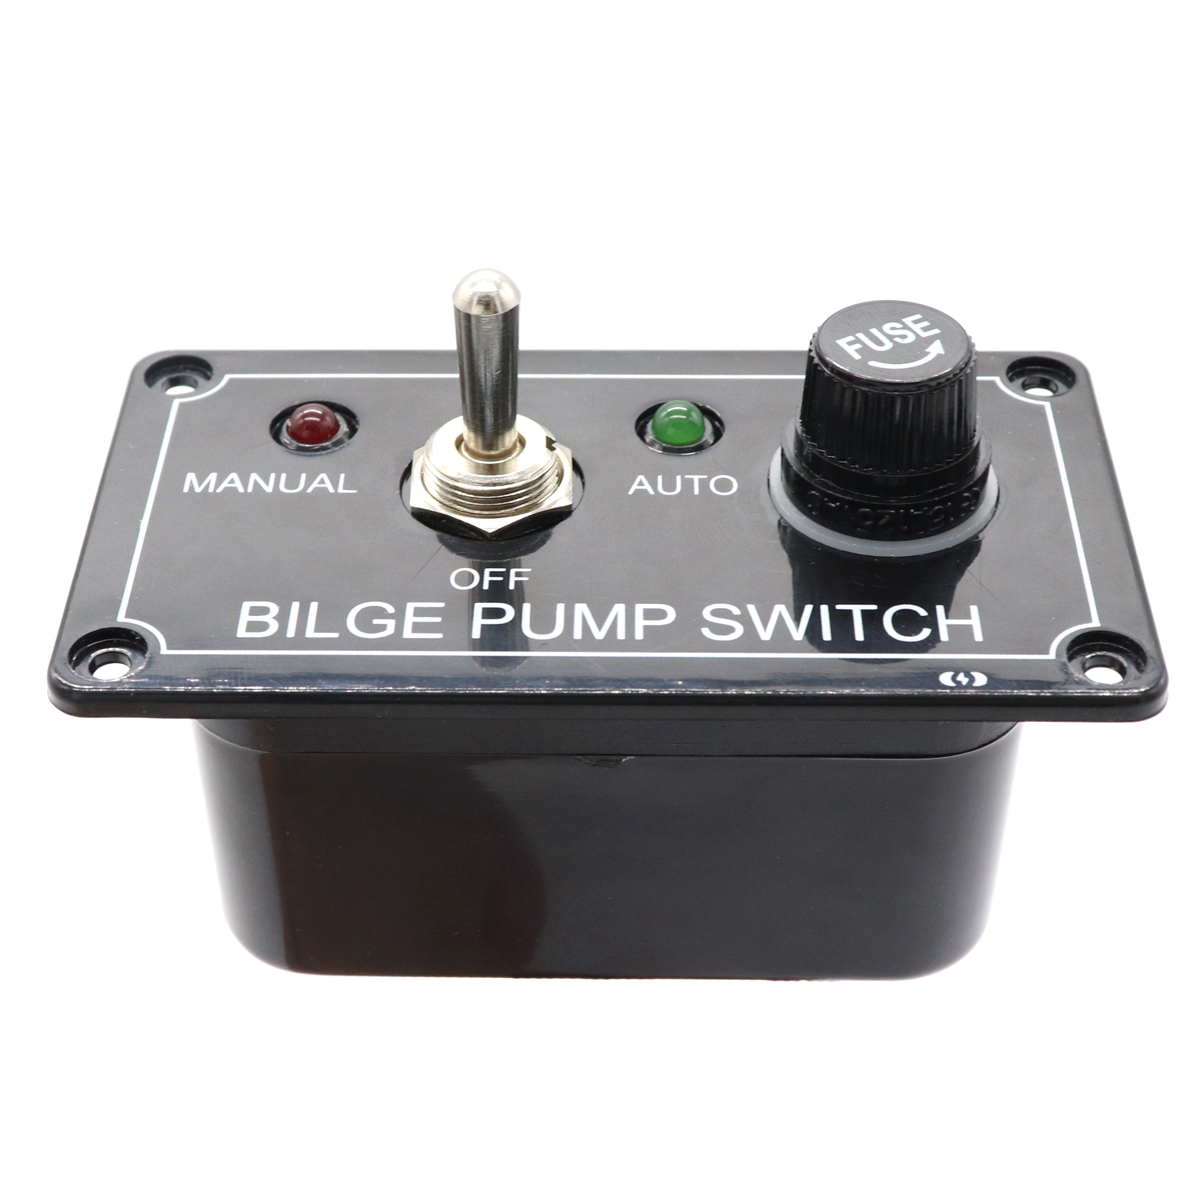 12V-LED-Indicator-Bilge-Pump-Switch-Panel-Housing-3-Way-Panel-Manual--Off--Auto-RV-Marine-Boat-1340425-8